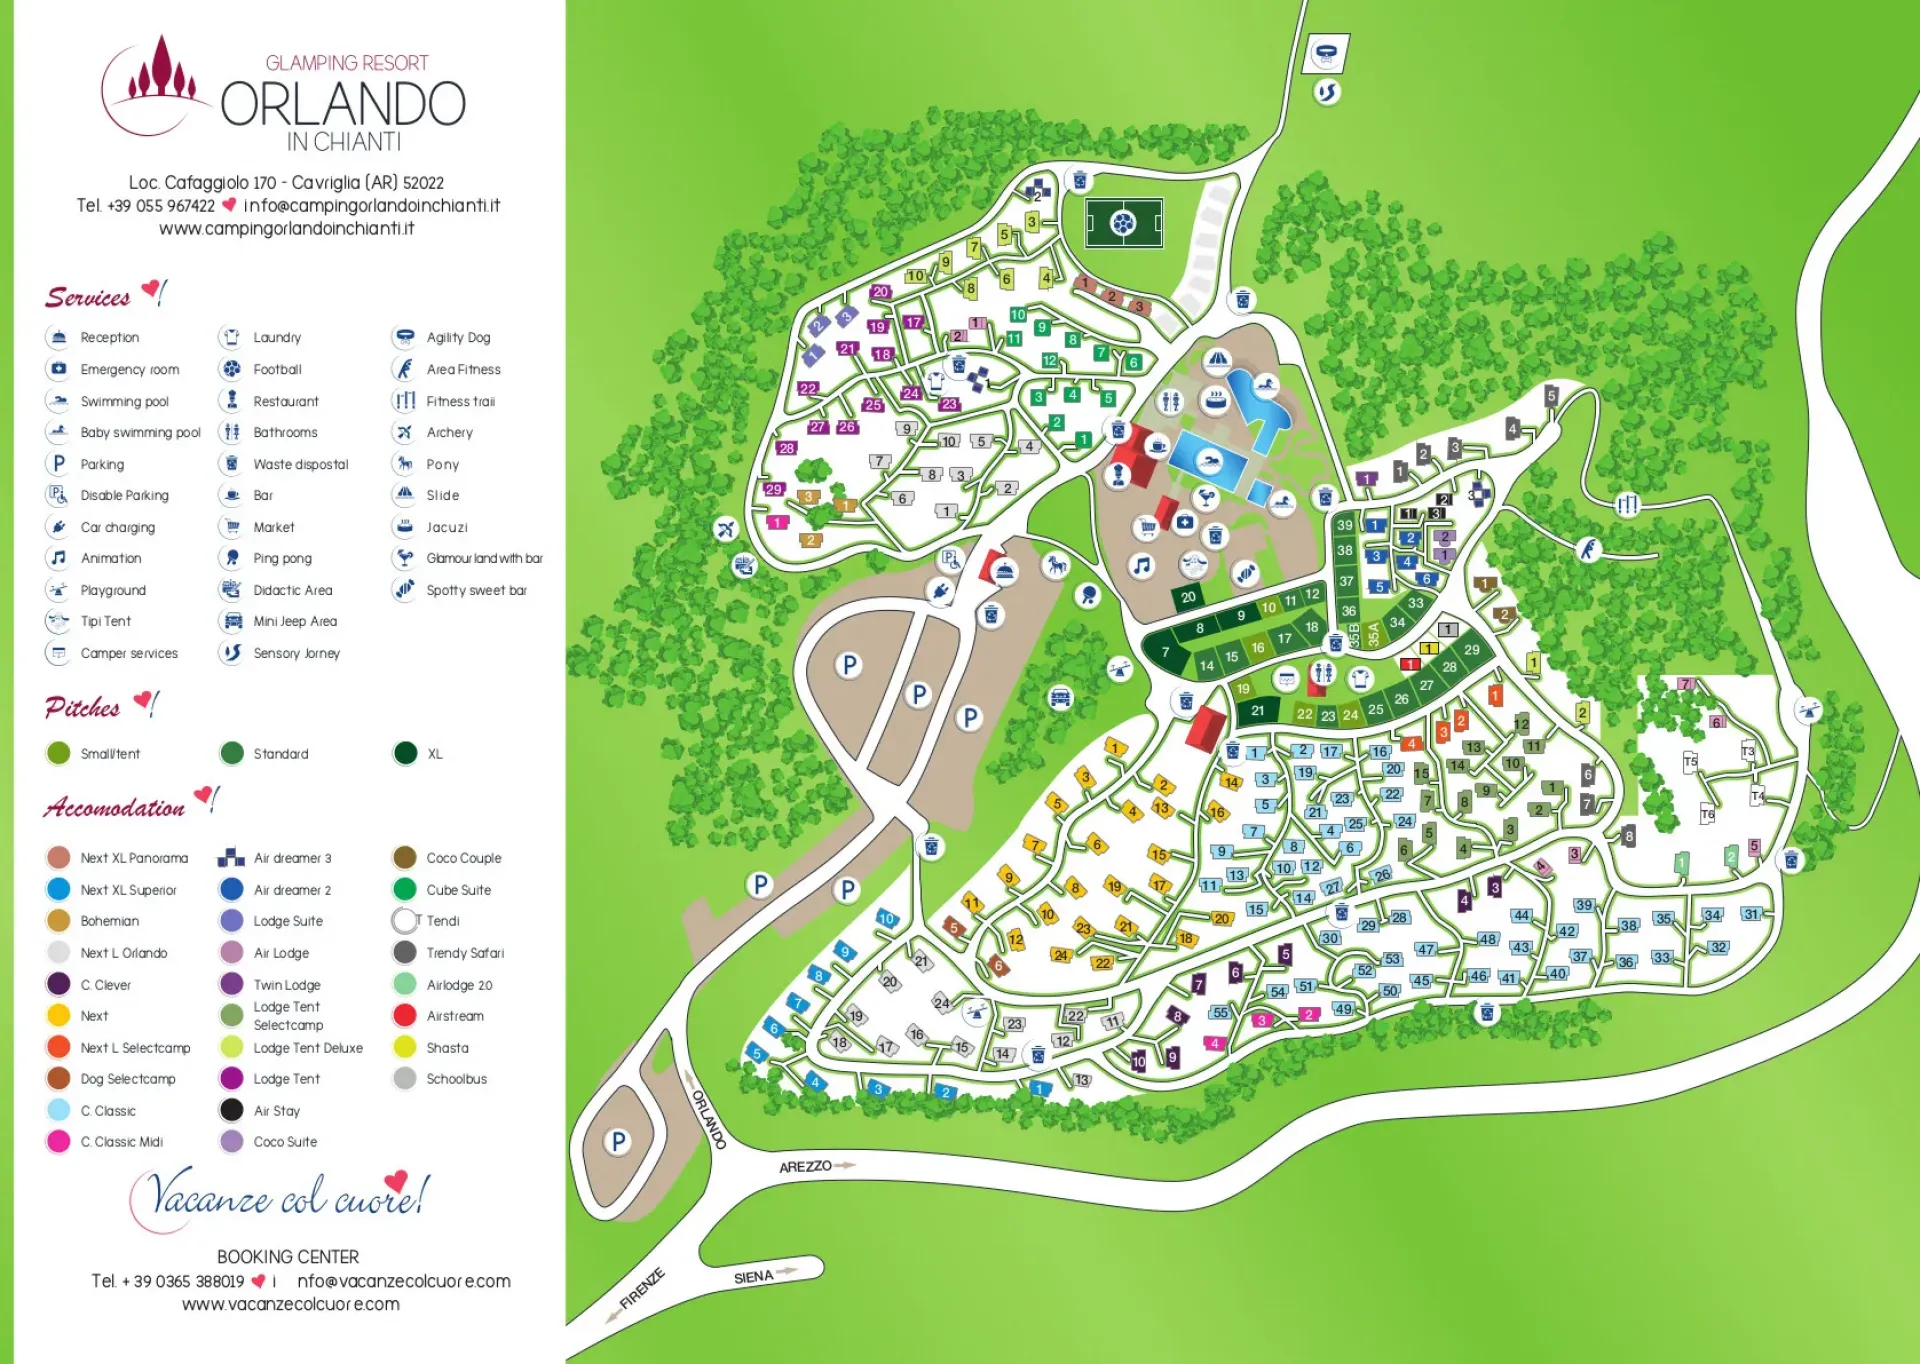 Orlando in Chianti Glamping Resort